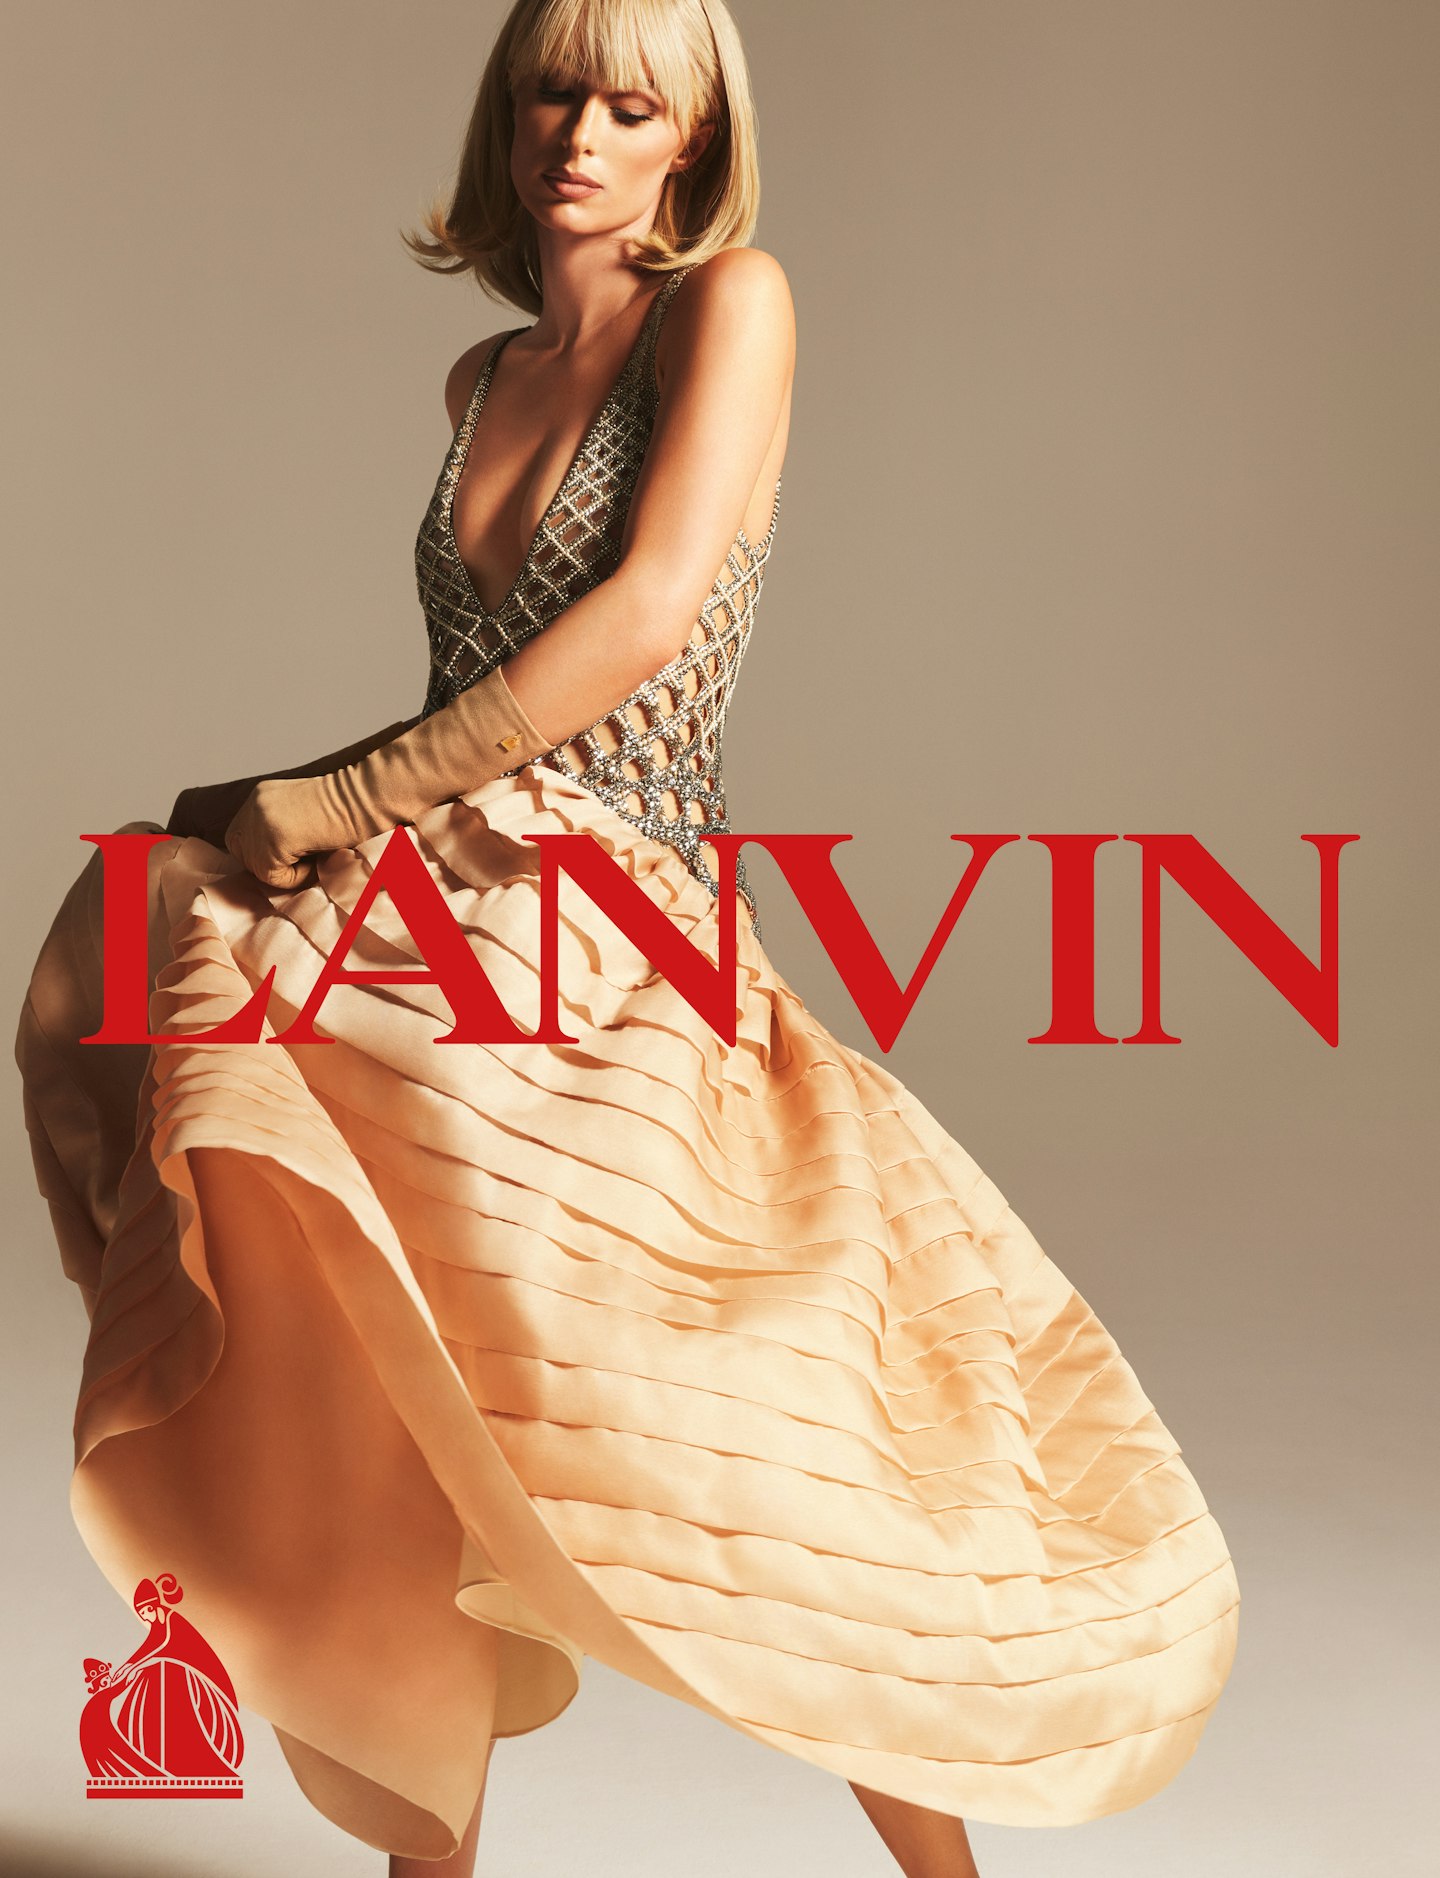 Paris Hilton wearing a cocktail dress from Lanvin